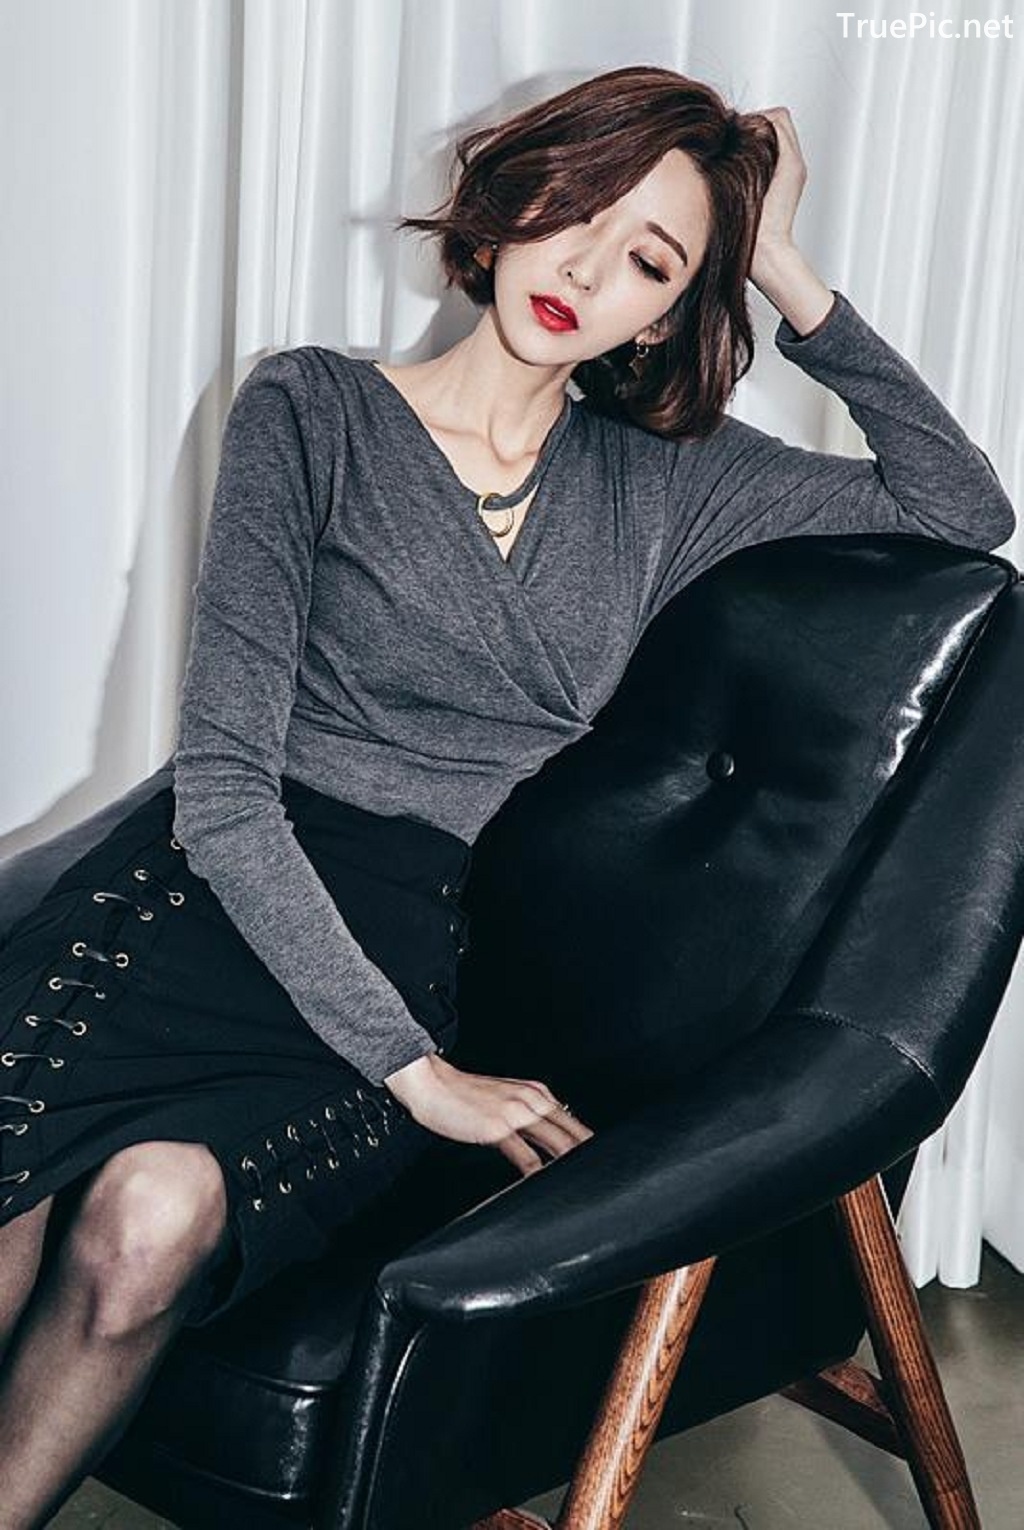 Image Ye Jin - Korean Fashion Model - Studio Photoshoot Collection - TruePic.net - Picture-73